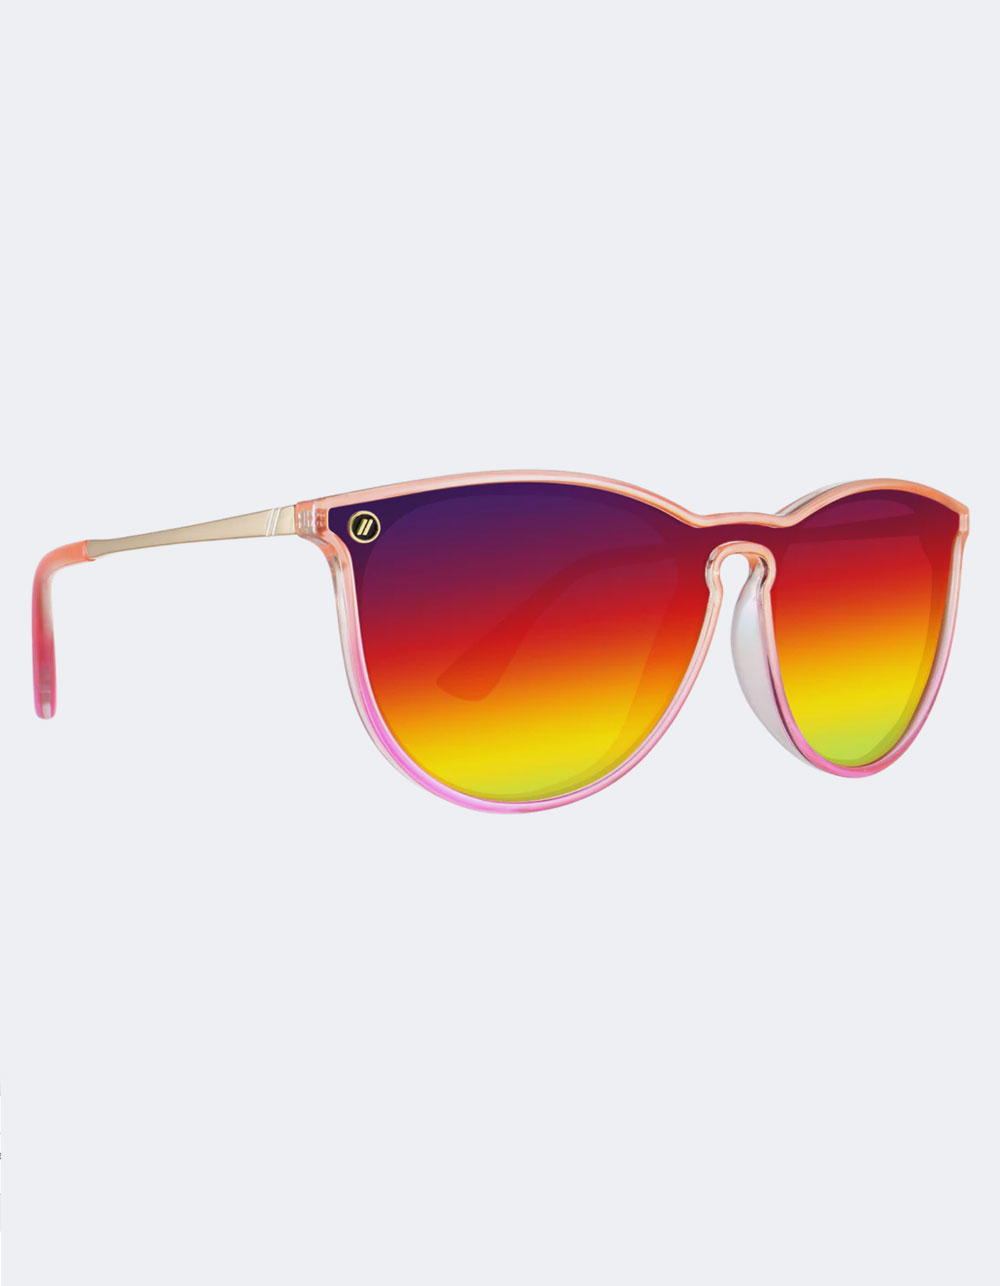 BLENDERS EYEWEAR North Park X2 Epic Dreamer Polarized Sunglasses